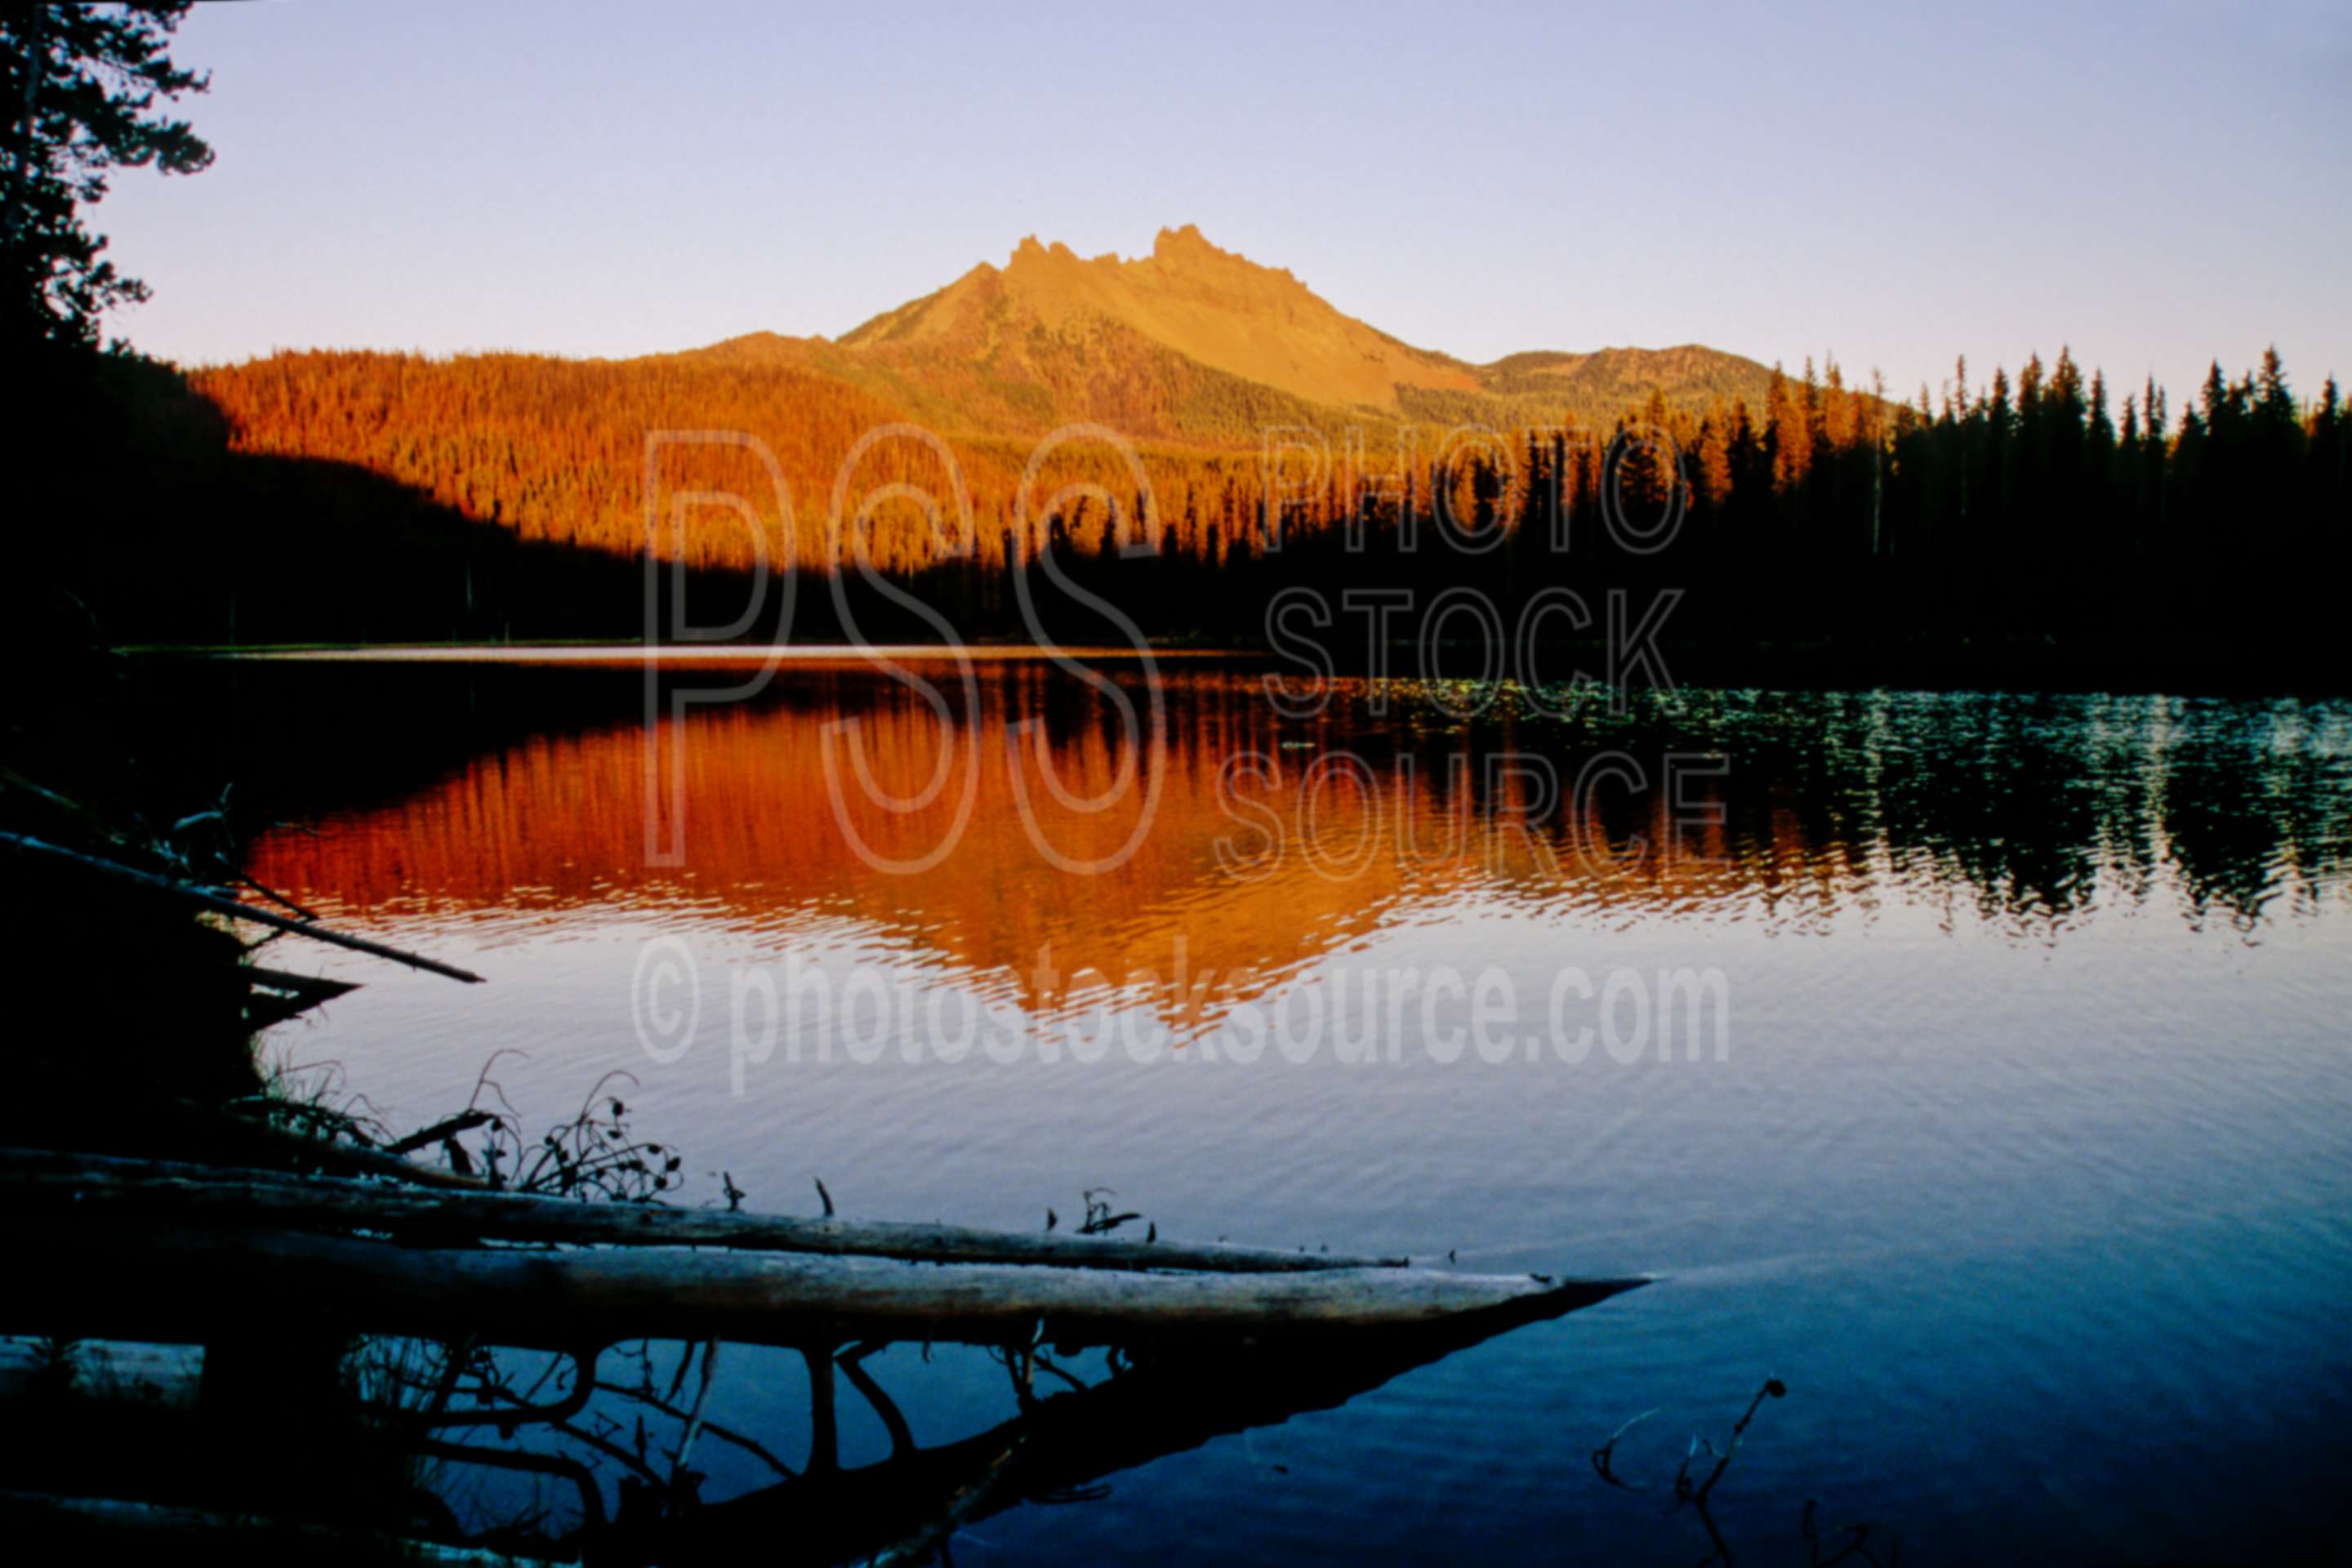 Three Fingered Jack,duffy lake,sunset,lake,usas,lakes rivers,mountains